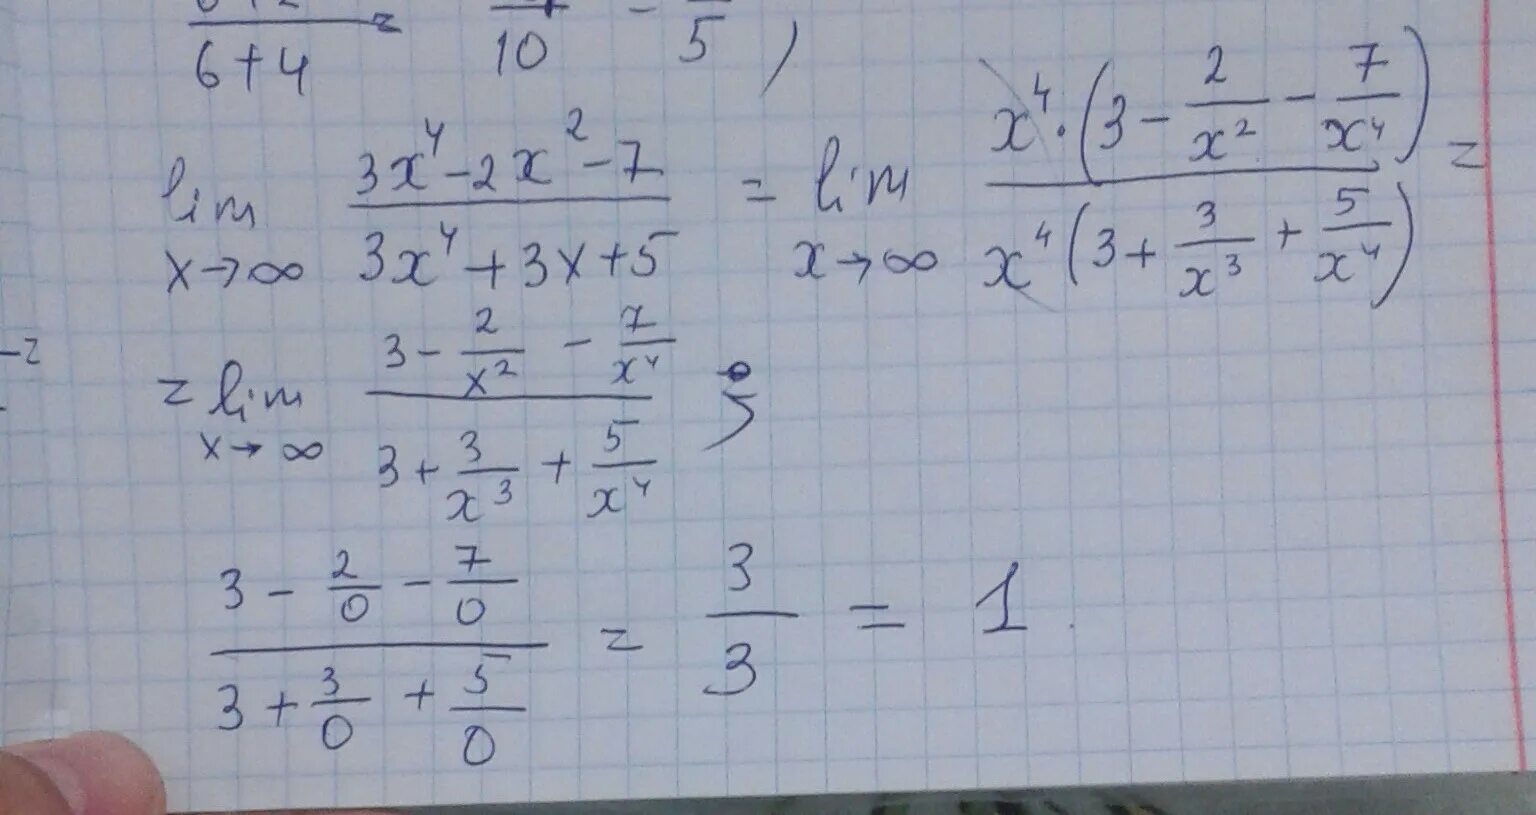 5 7 21 x. Lim x стремится к бесконечности 2/x 2+3x. Lim x стремится к бесконечности x^2-4x+3/x+5. Lim x стремиться к бесконечности ( 2x/2x-3)^3x. Lim x стремится к бесконечности 3+x-5x4.